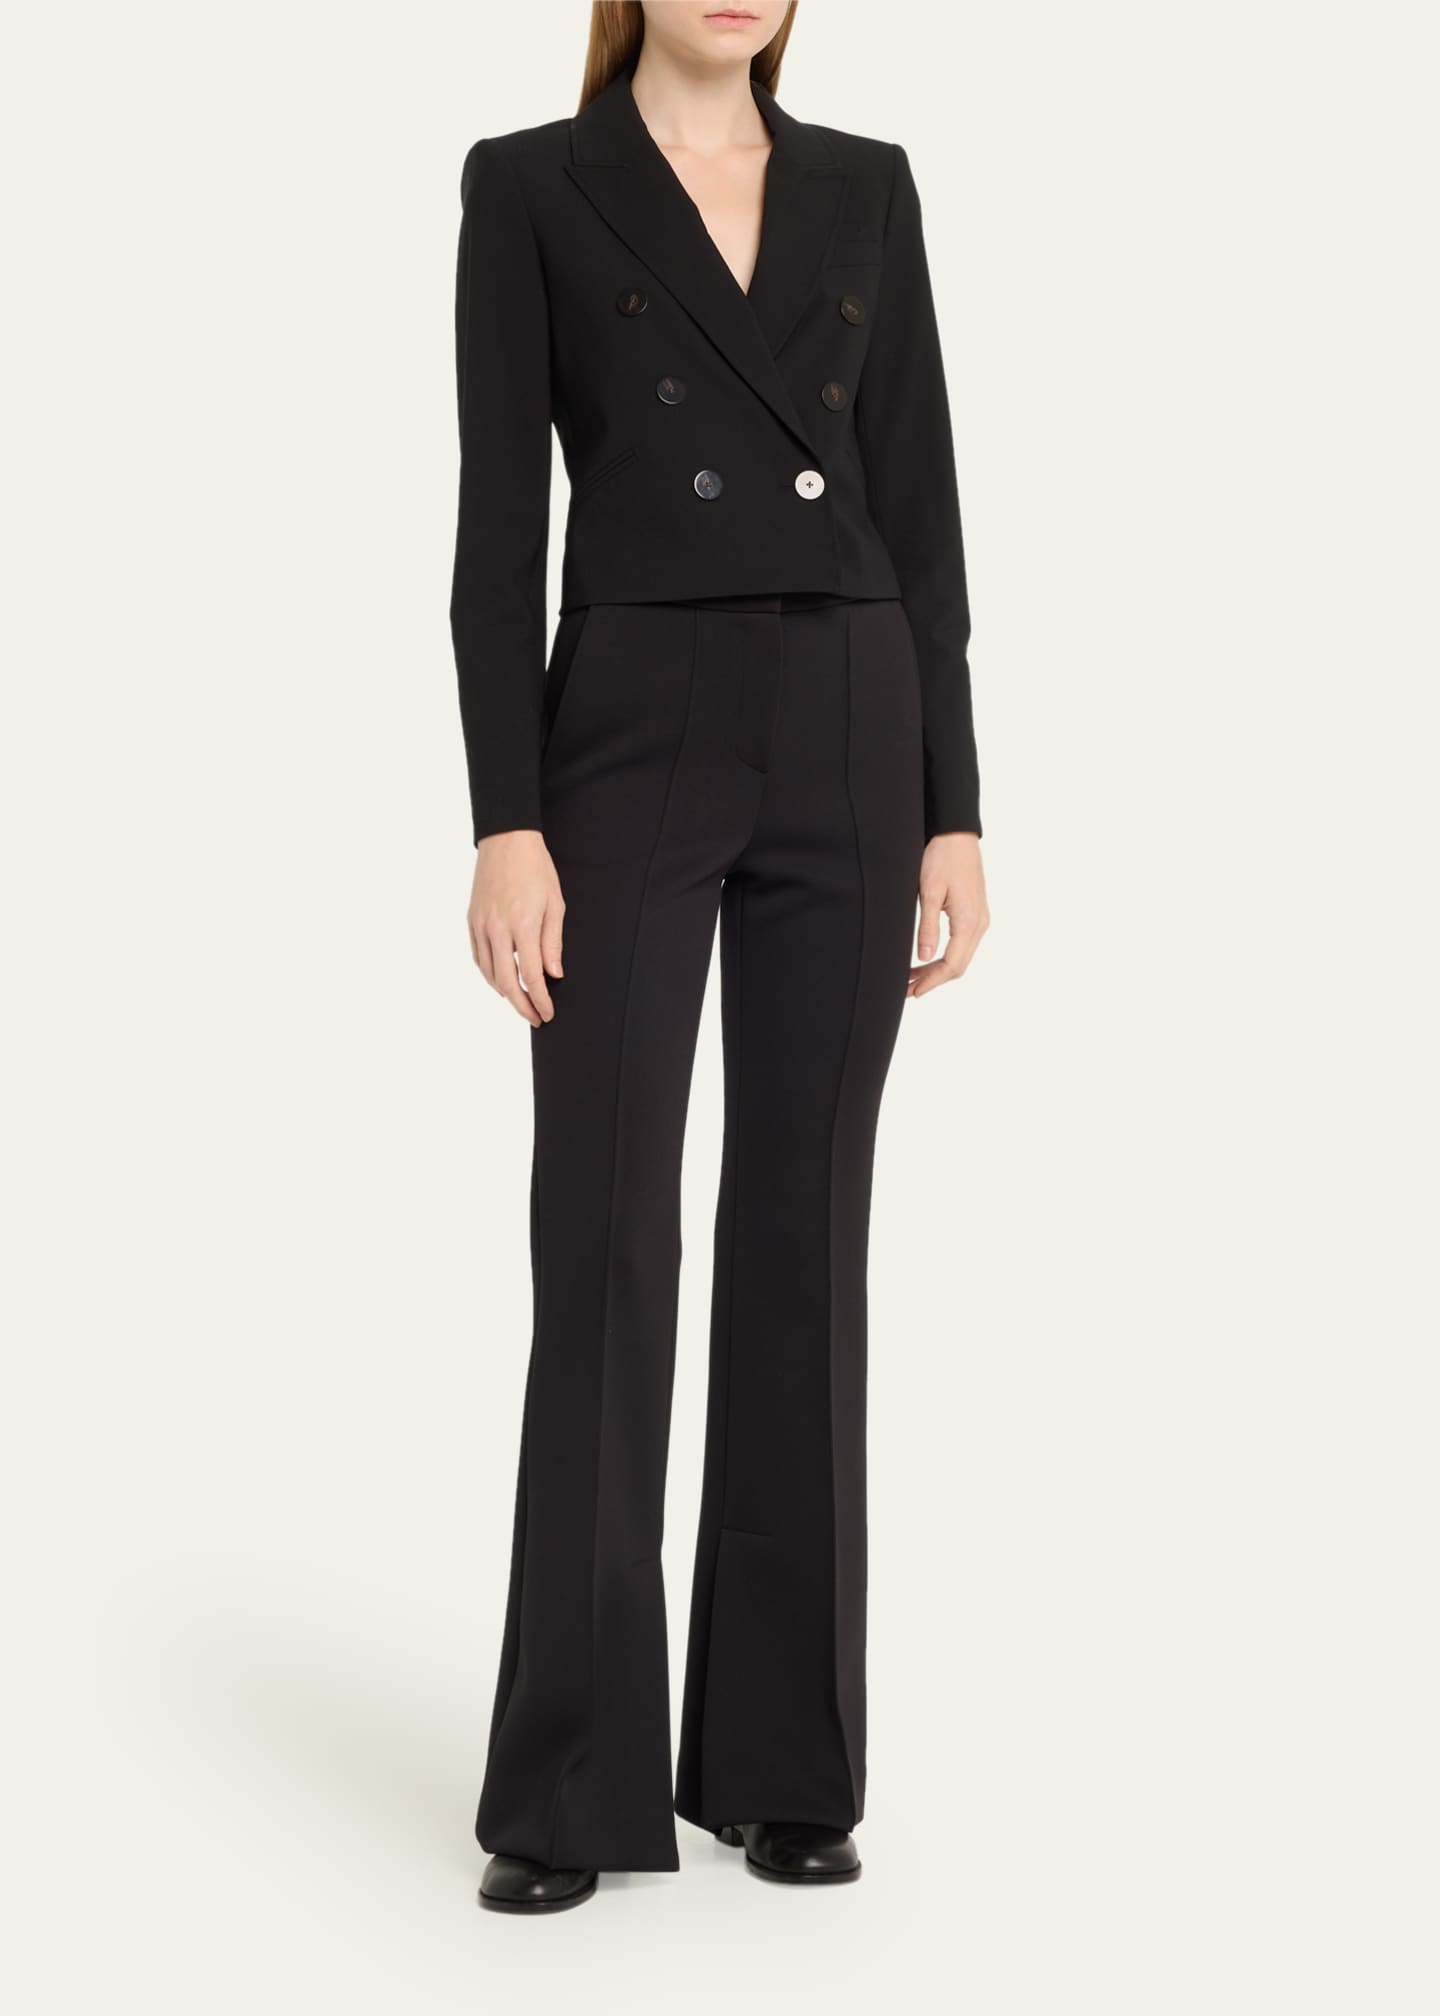 Veronica Beard Nevis Cropped Tailored Jacket - Bergdorf Goodman